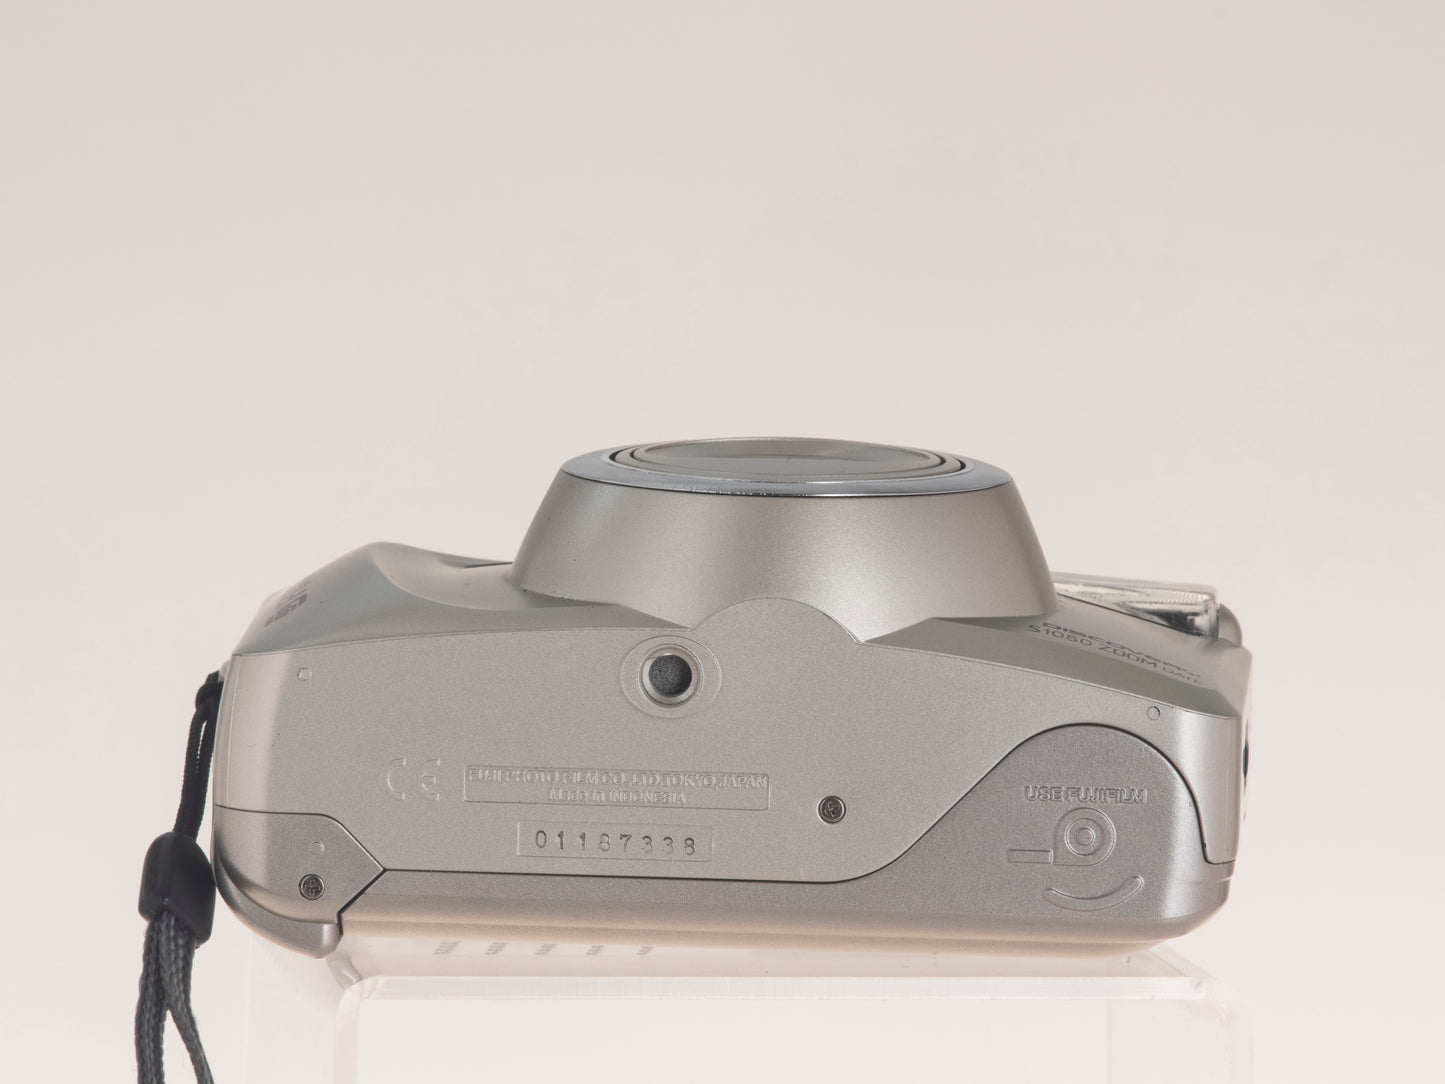 Fujifilm Discovery S1050 Zoom Date